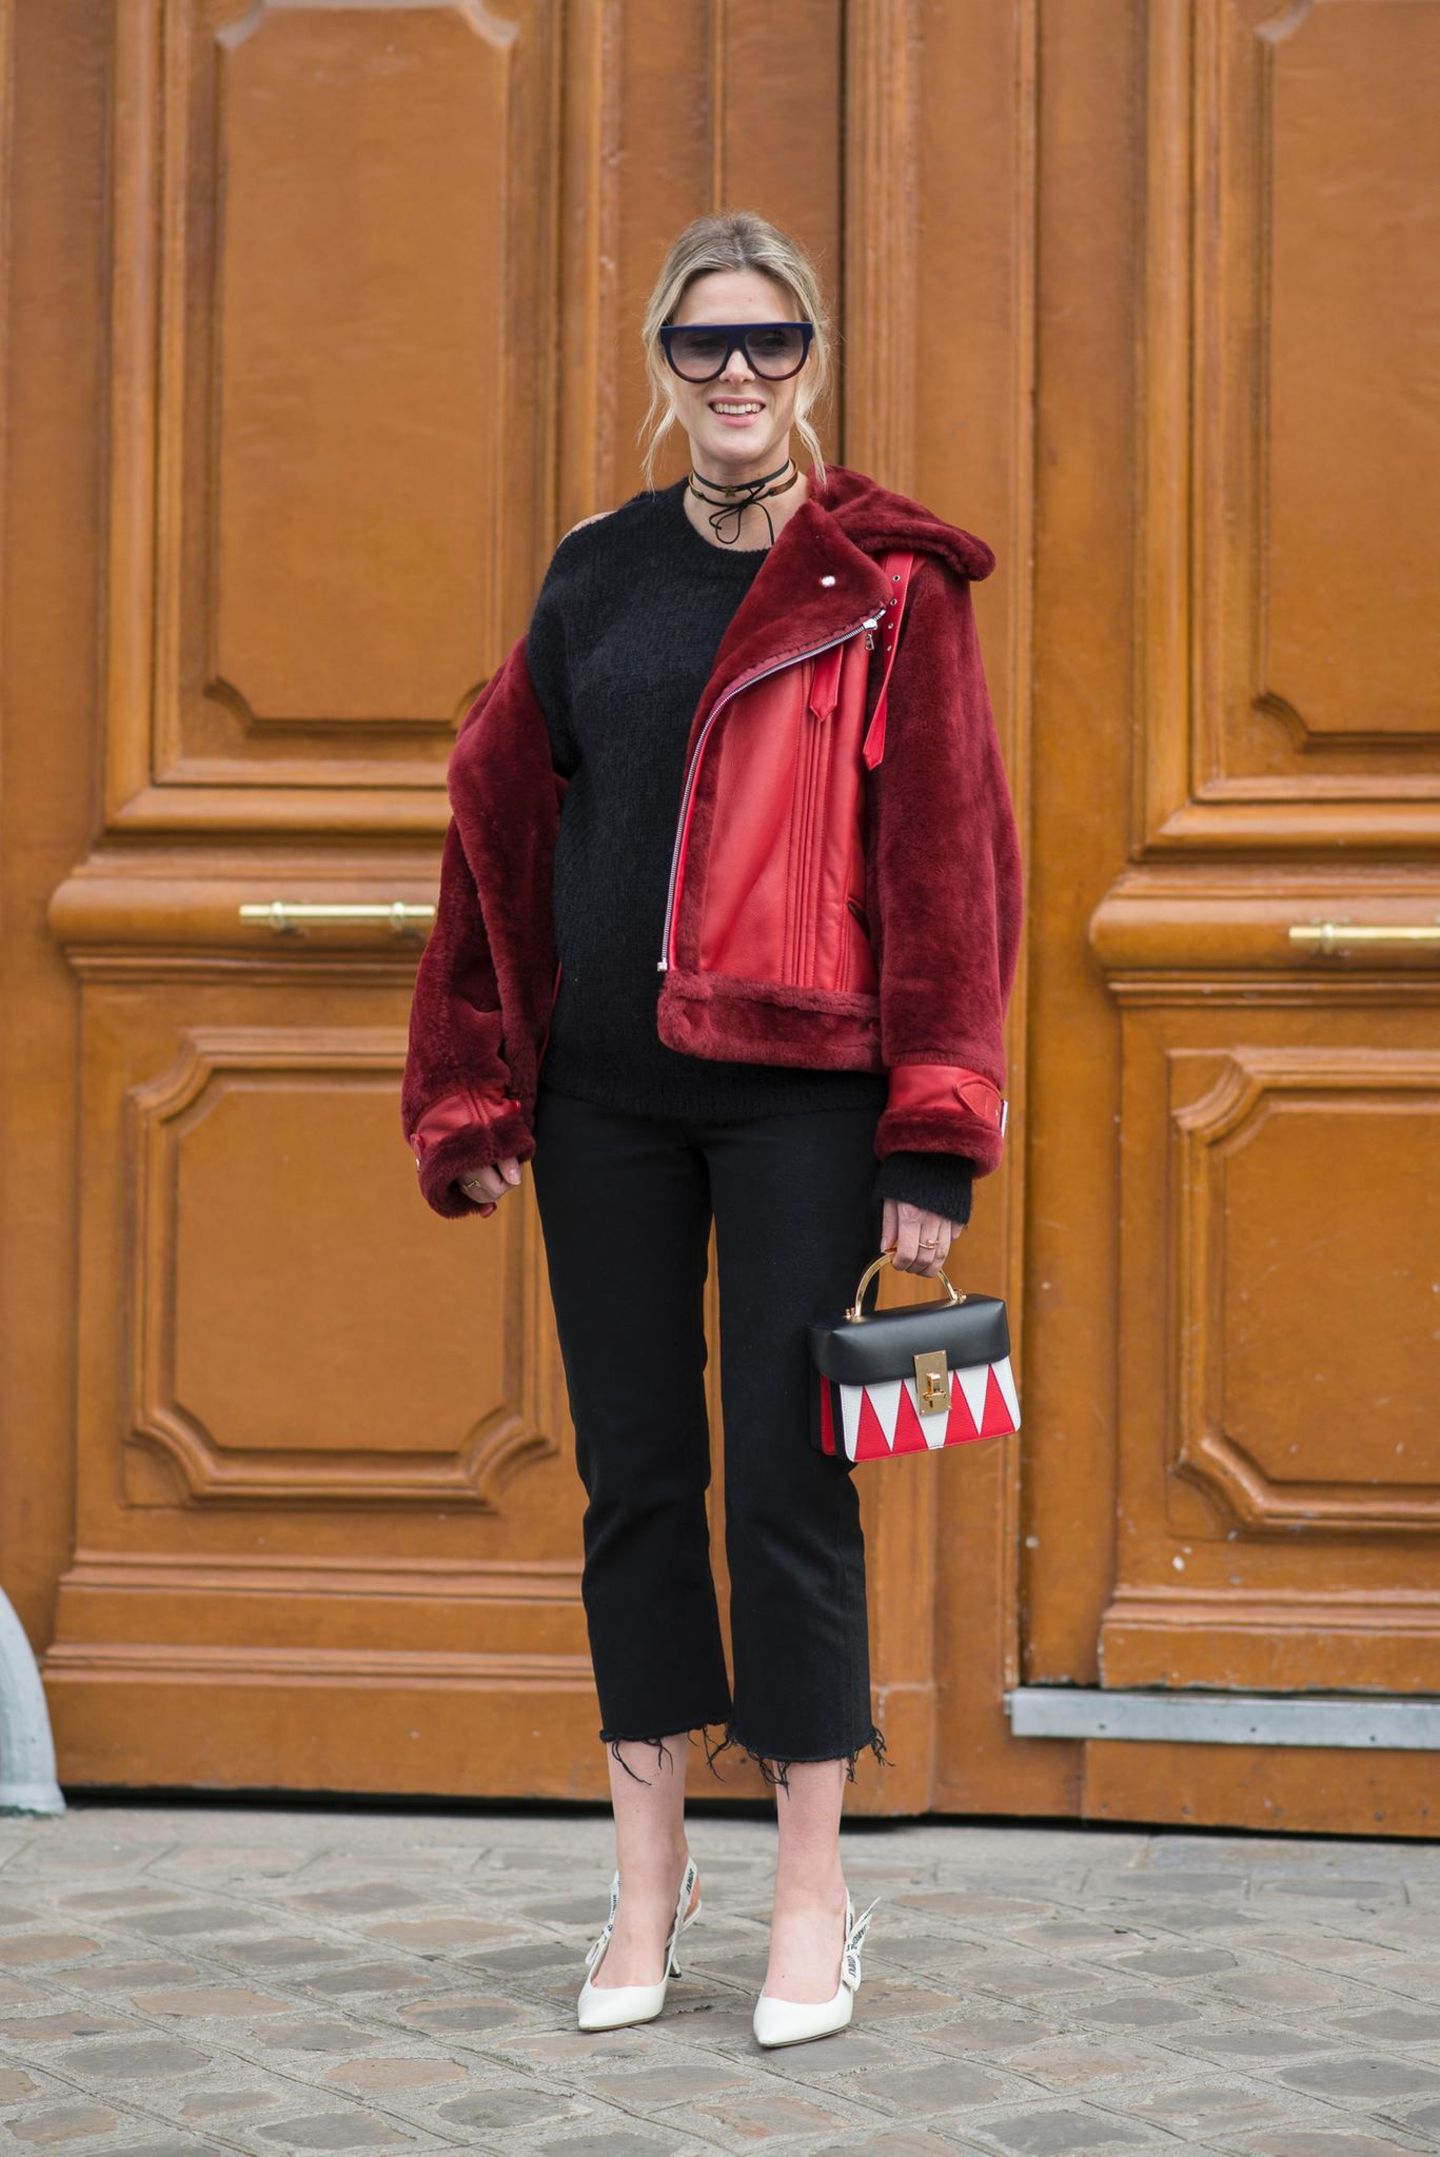 Bloggerin trägt schwarzes Outfit zu roter Lammfelljacke